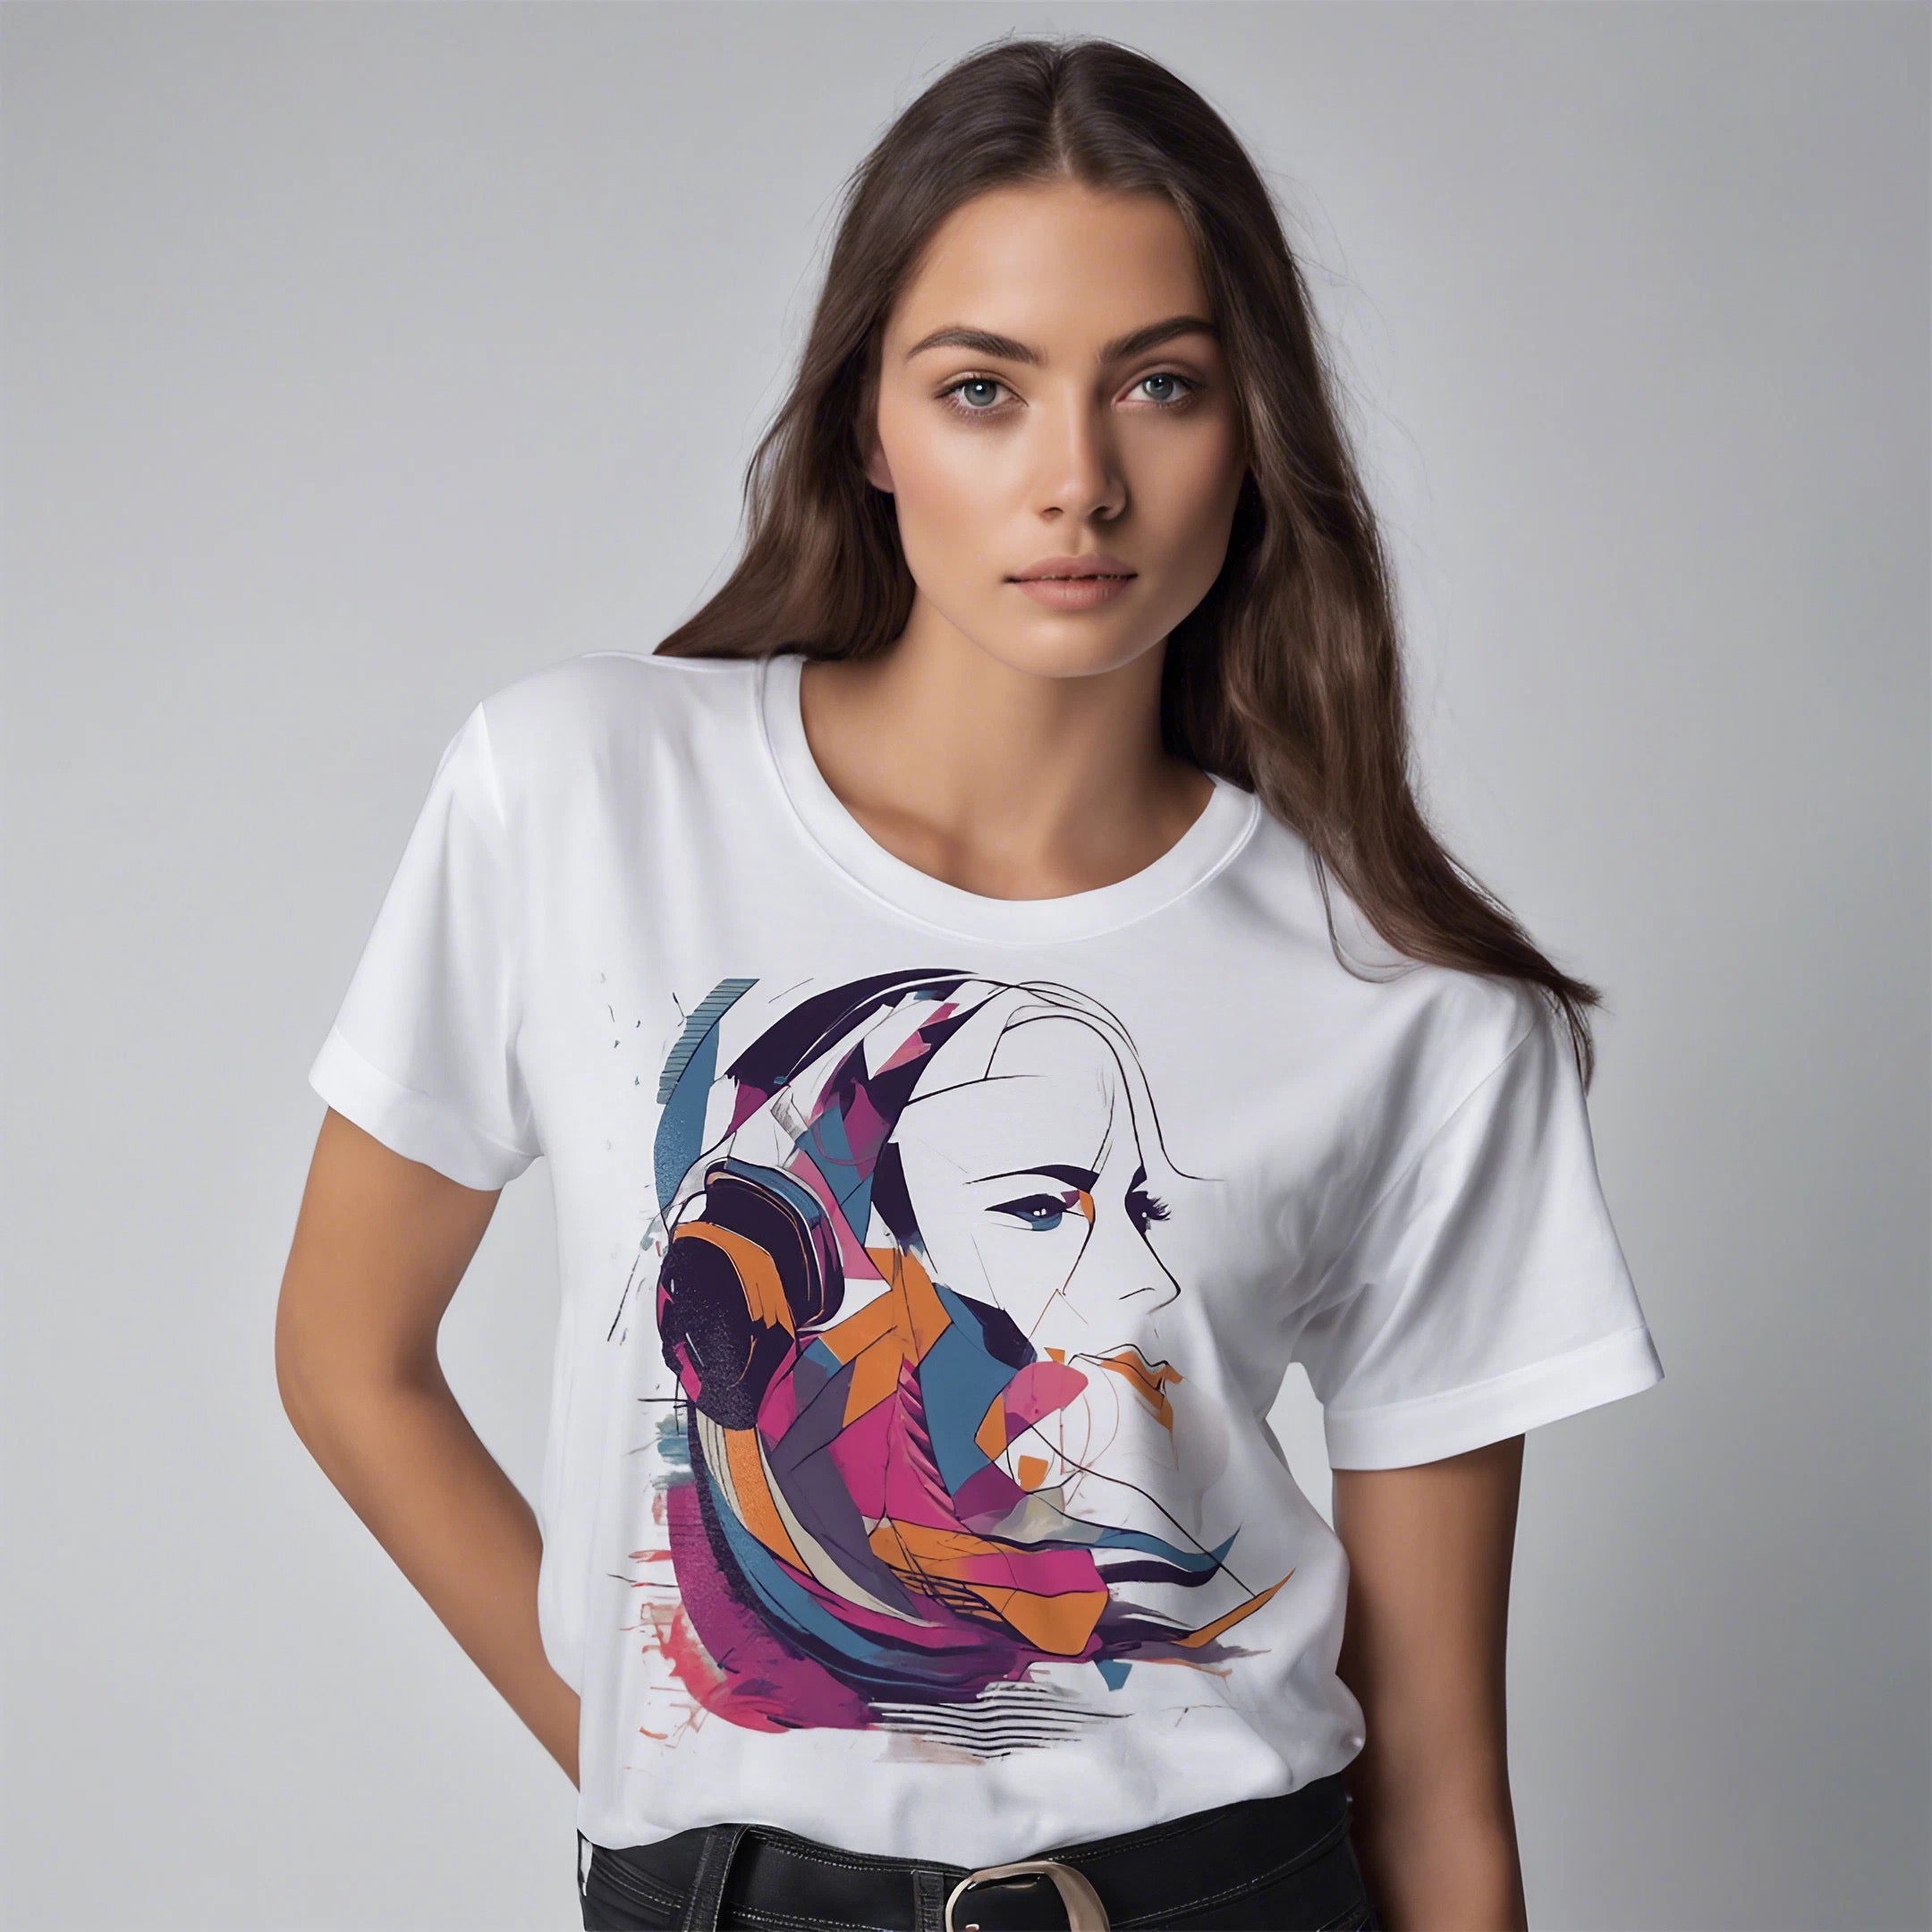 Palette of Sounds Women's T-Shirt